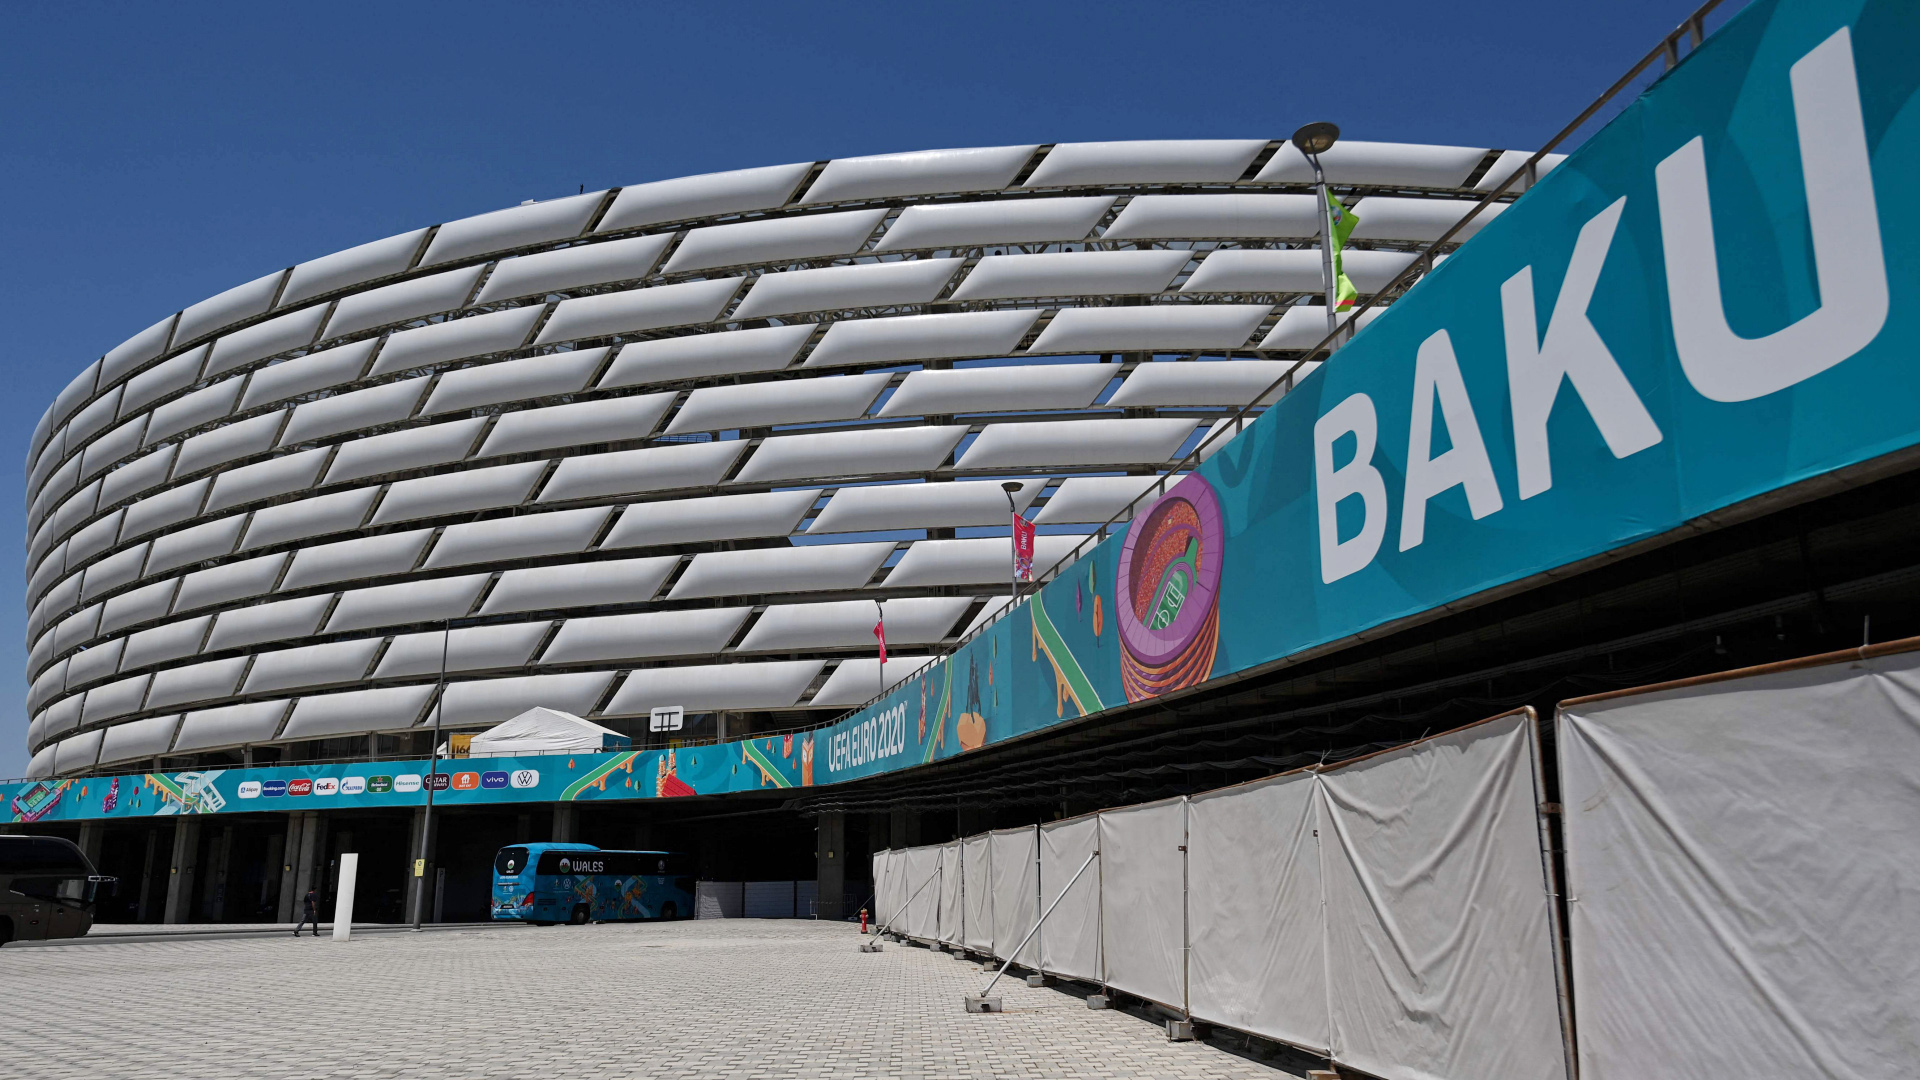 Stadion der Fußball-EM in Baku (Aserbaidschan) | AFP